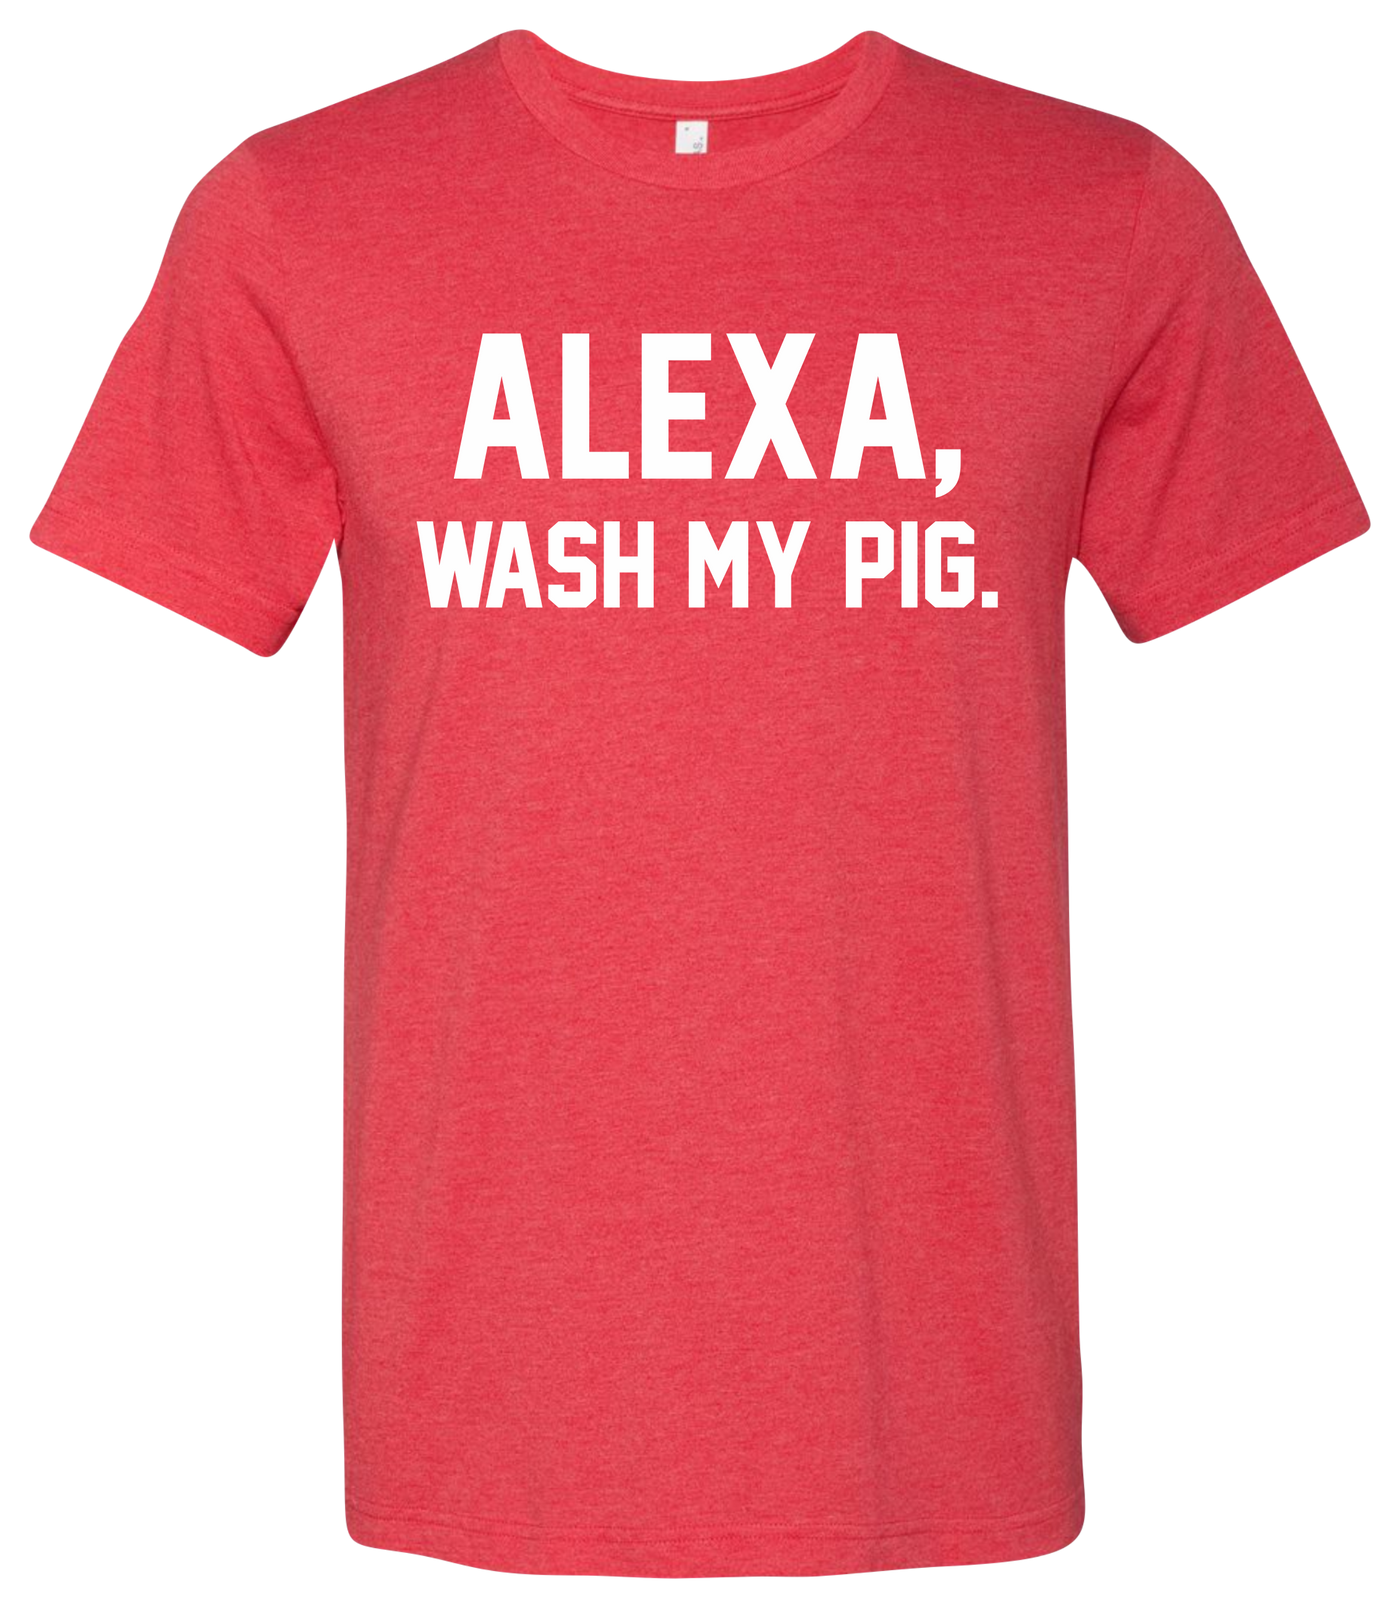 Alexa Request Short-Sleeve Graphic T-shirt